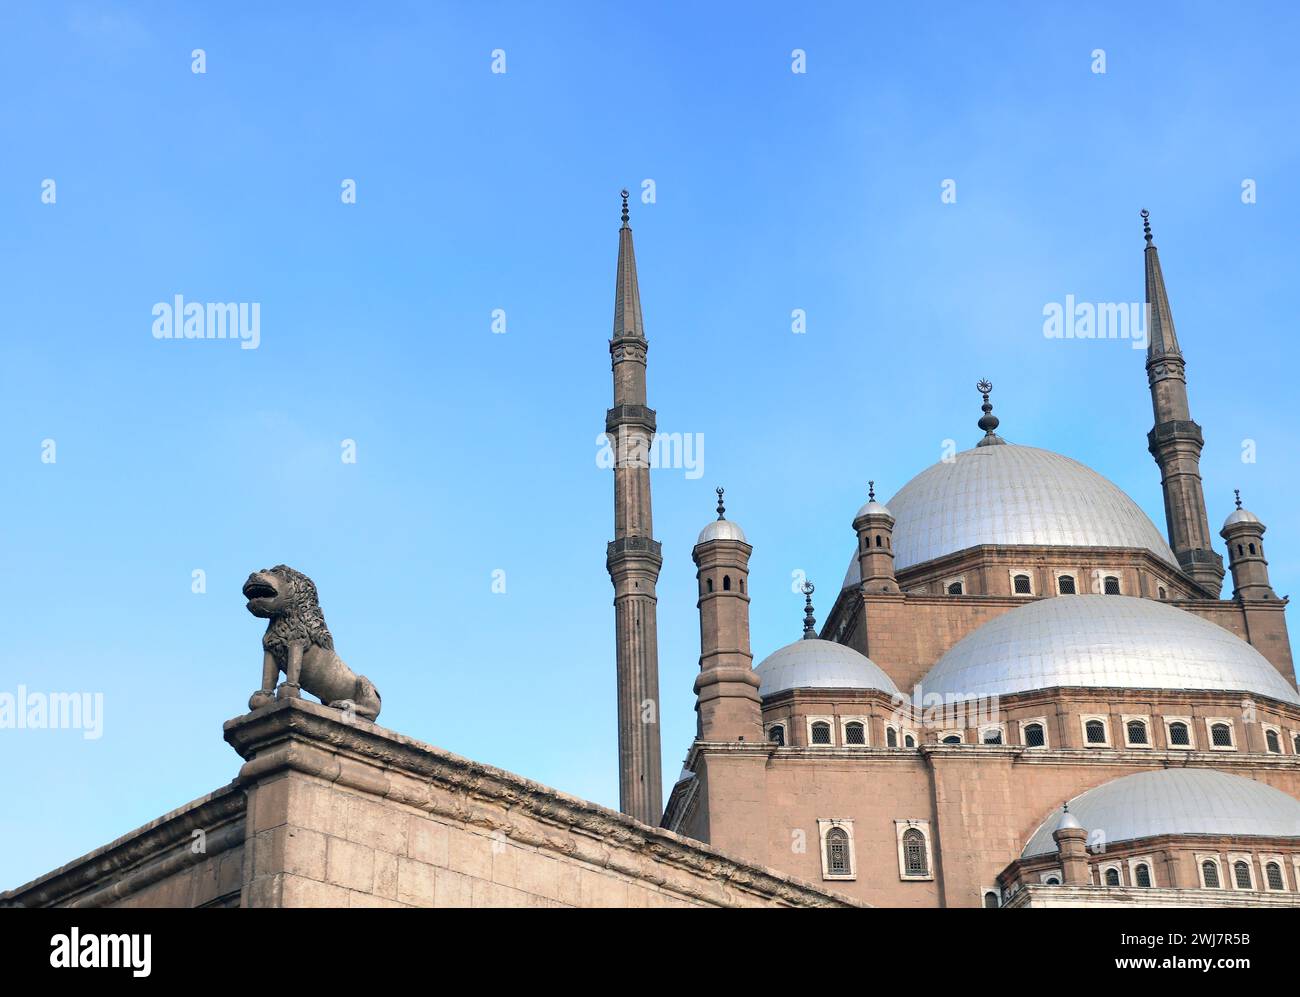 Great Mosque of Muhammad Ali Pasha in ancient Cairo Citadel, Egypt, North Africa. Famous landmark of Cairo - ottoman era Alabaster Mosque in Citadel Stock Photo